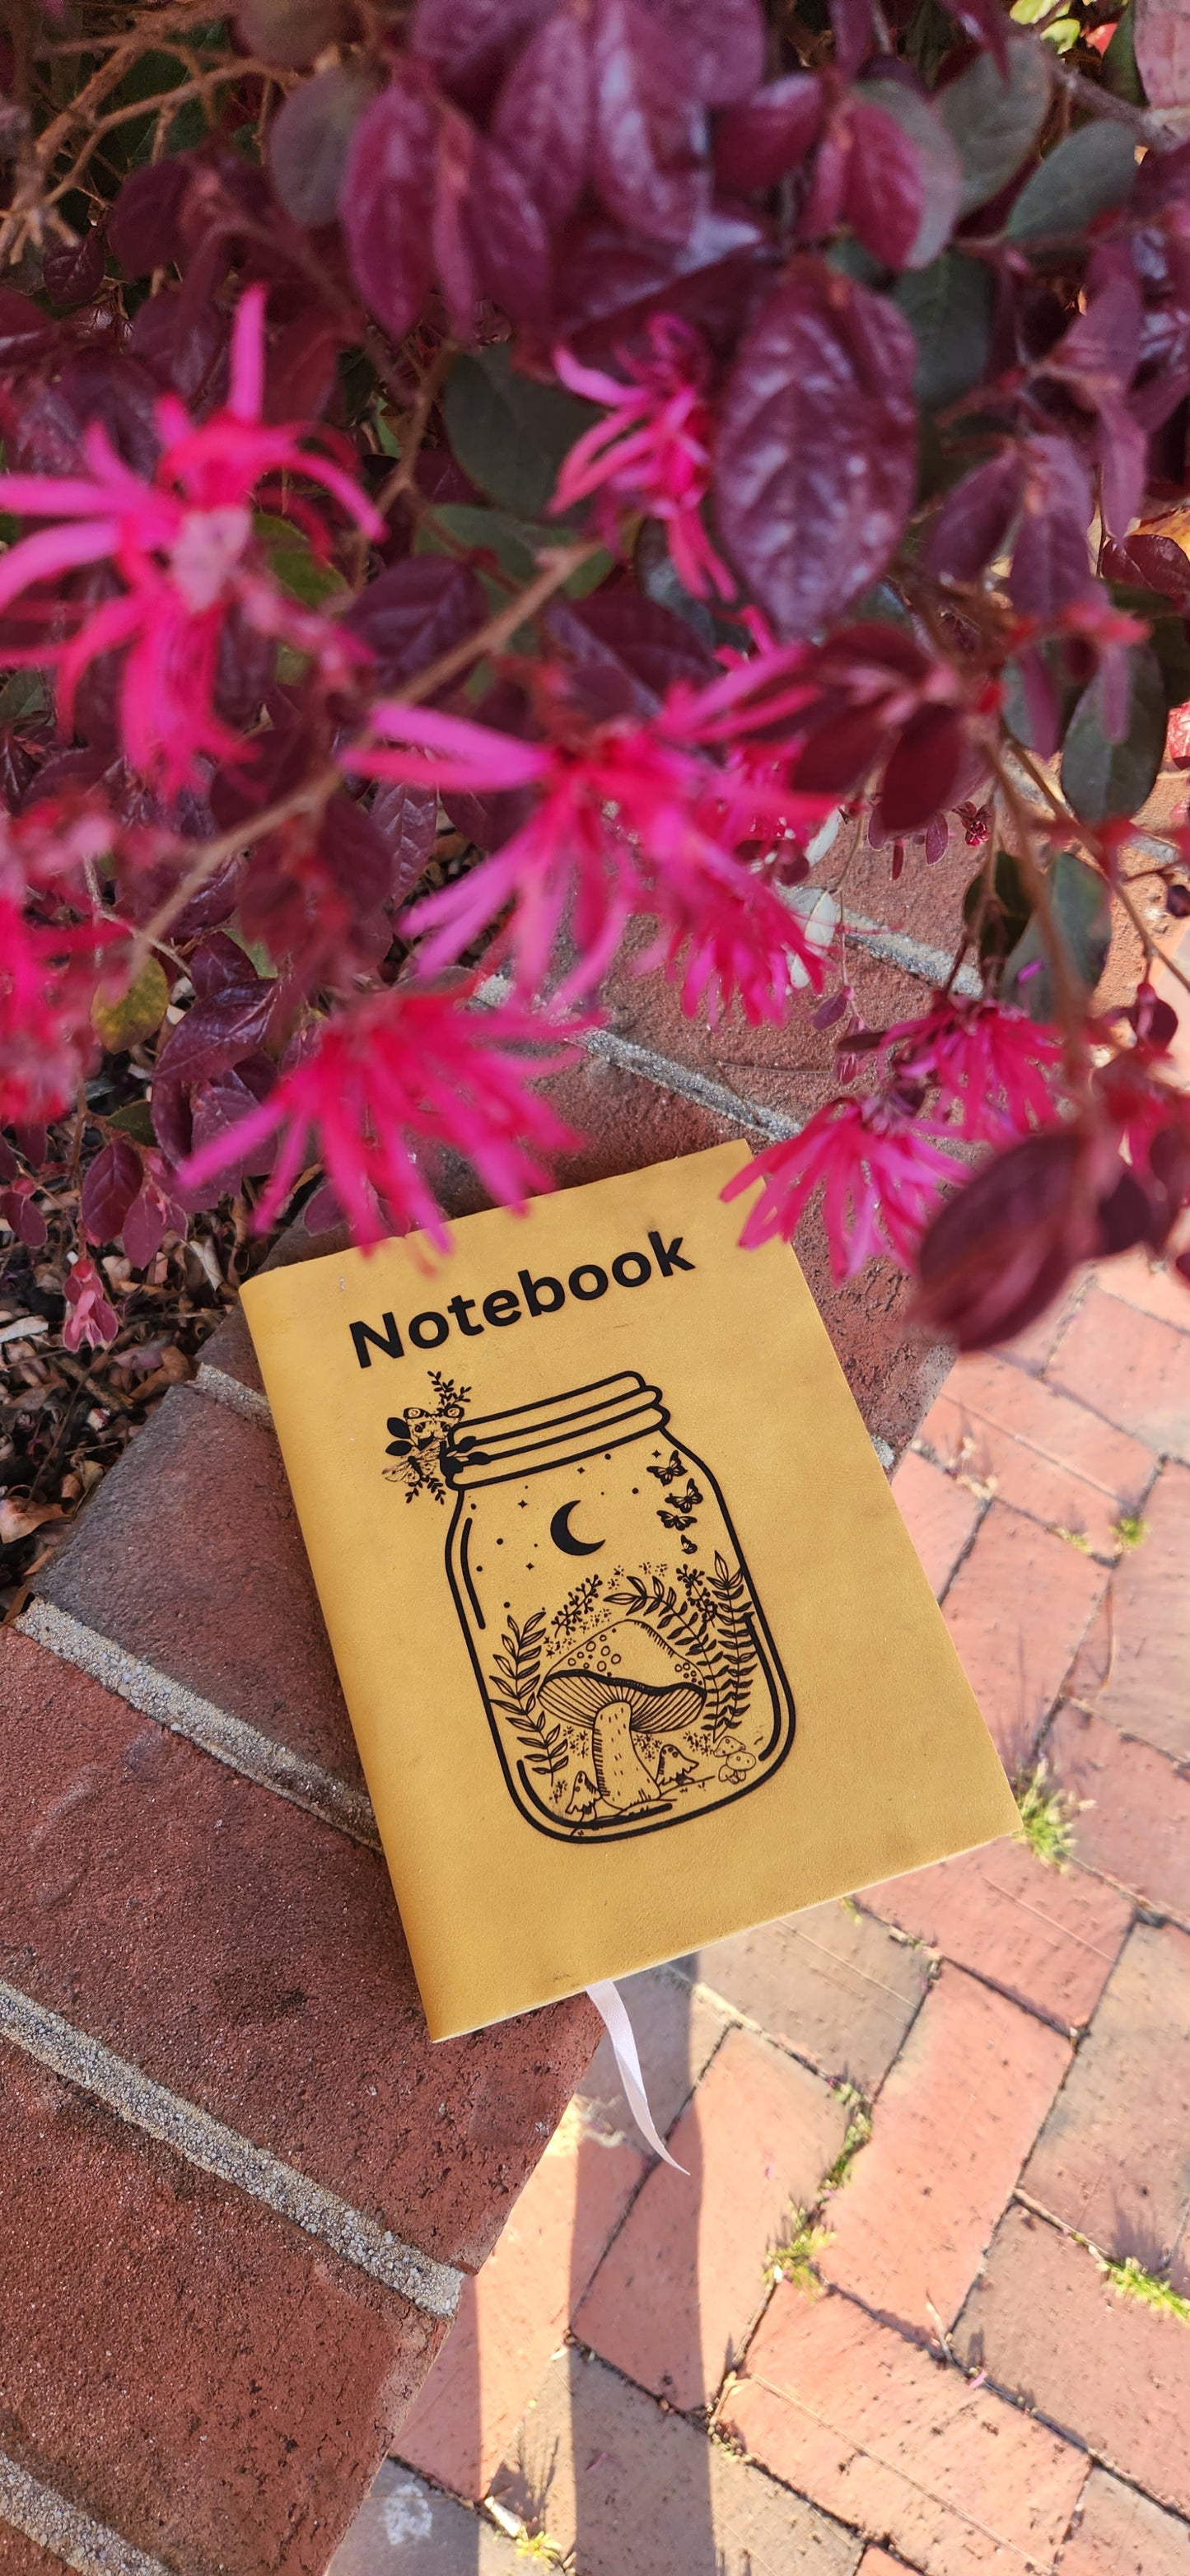 Custom Non-leather journal